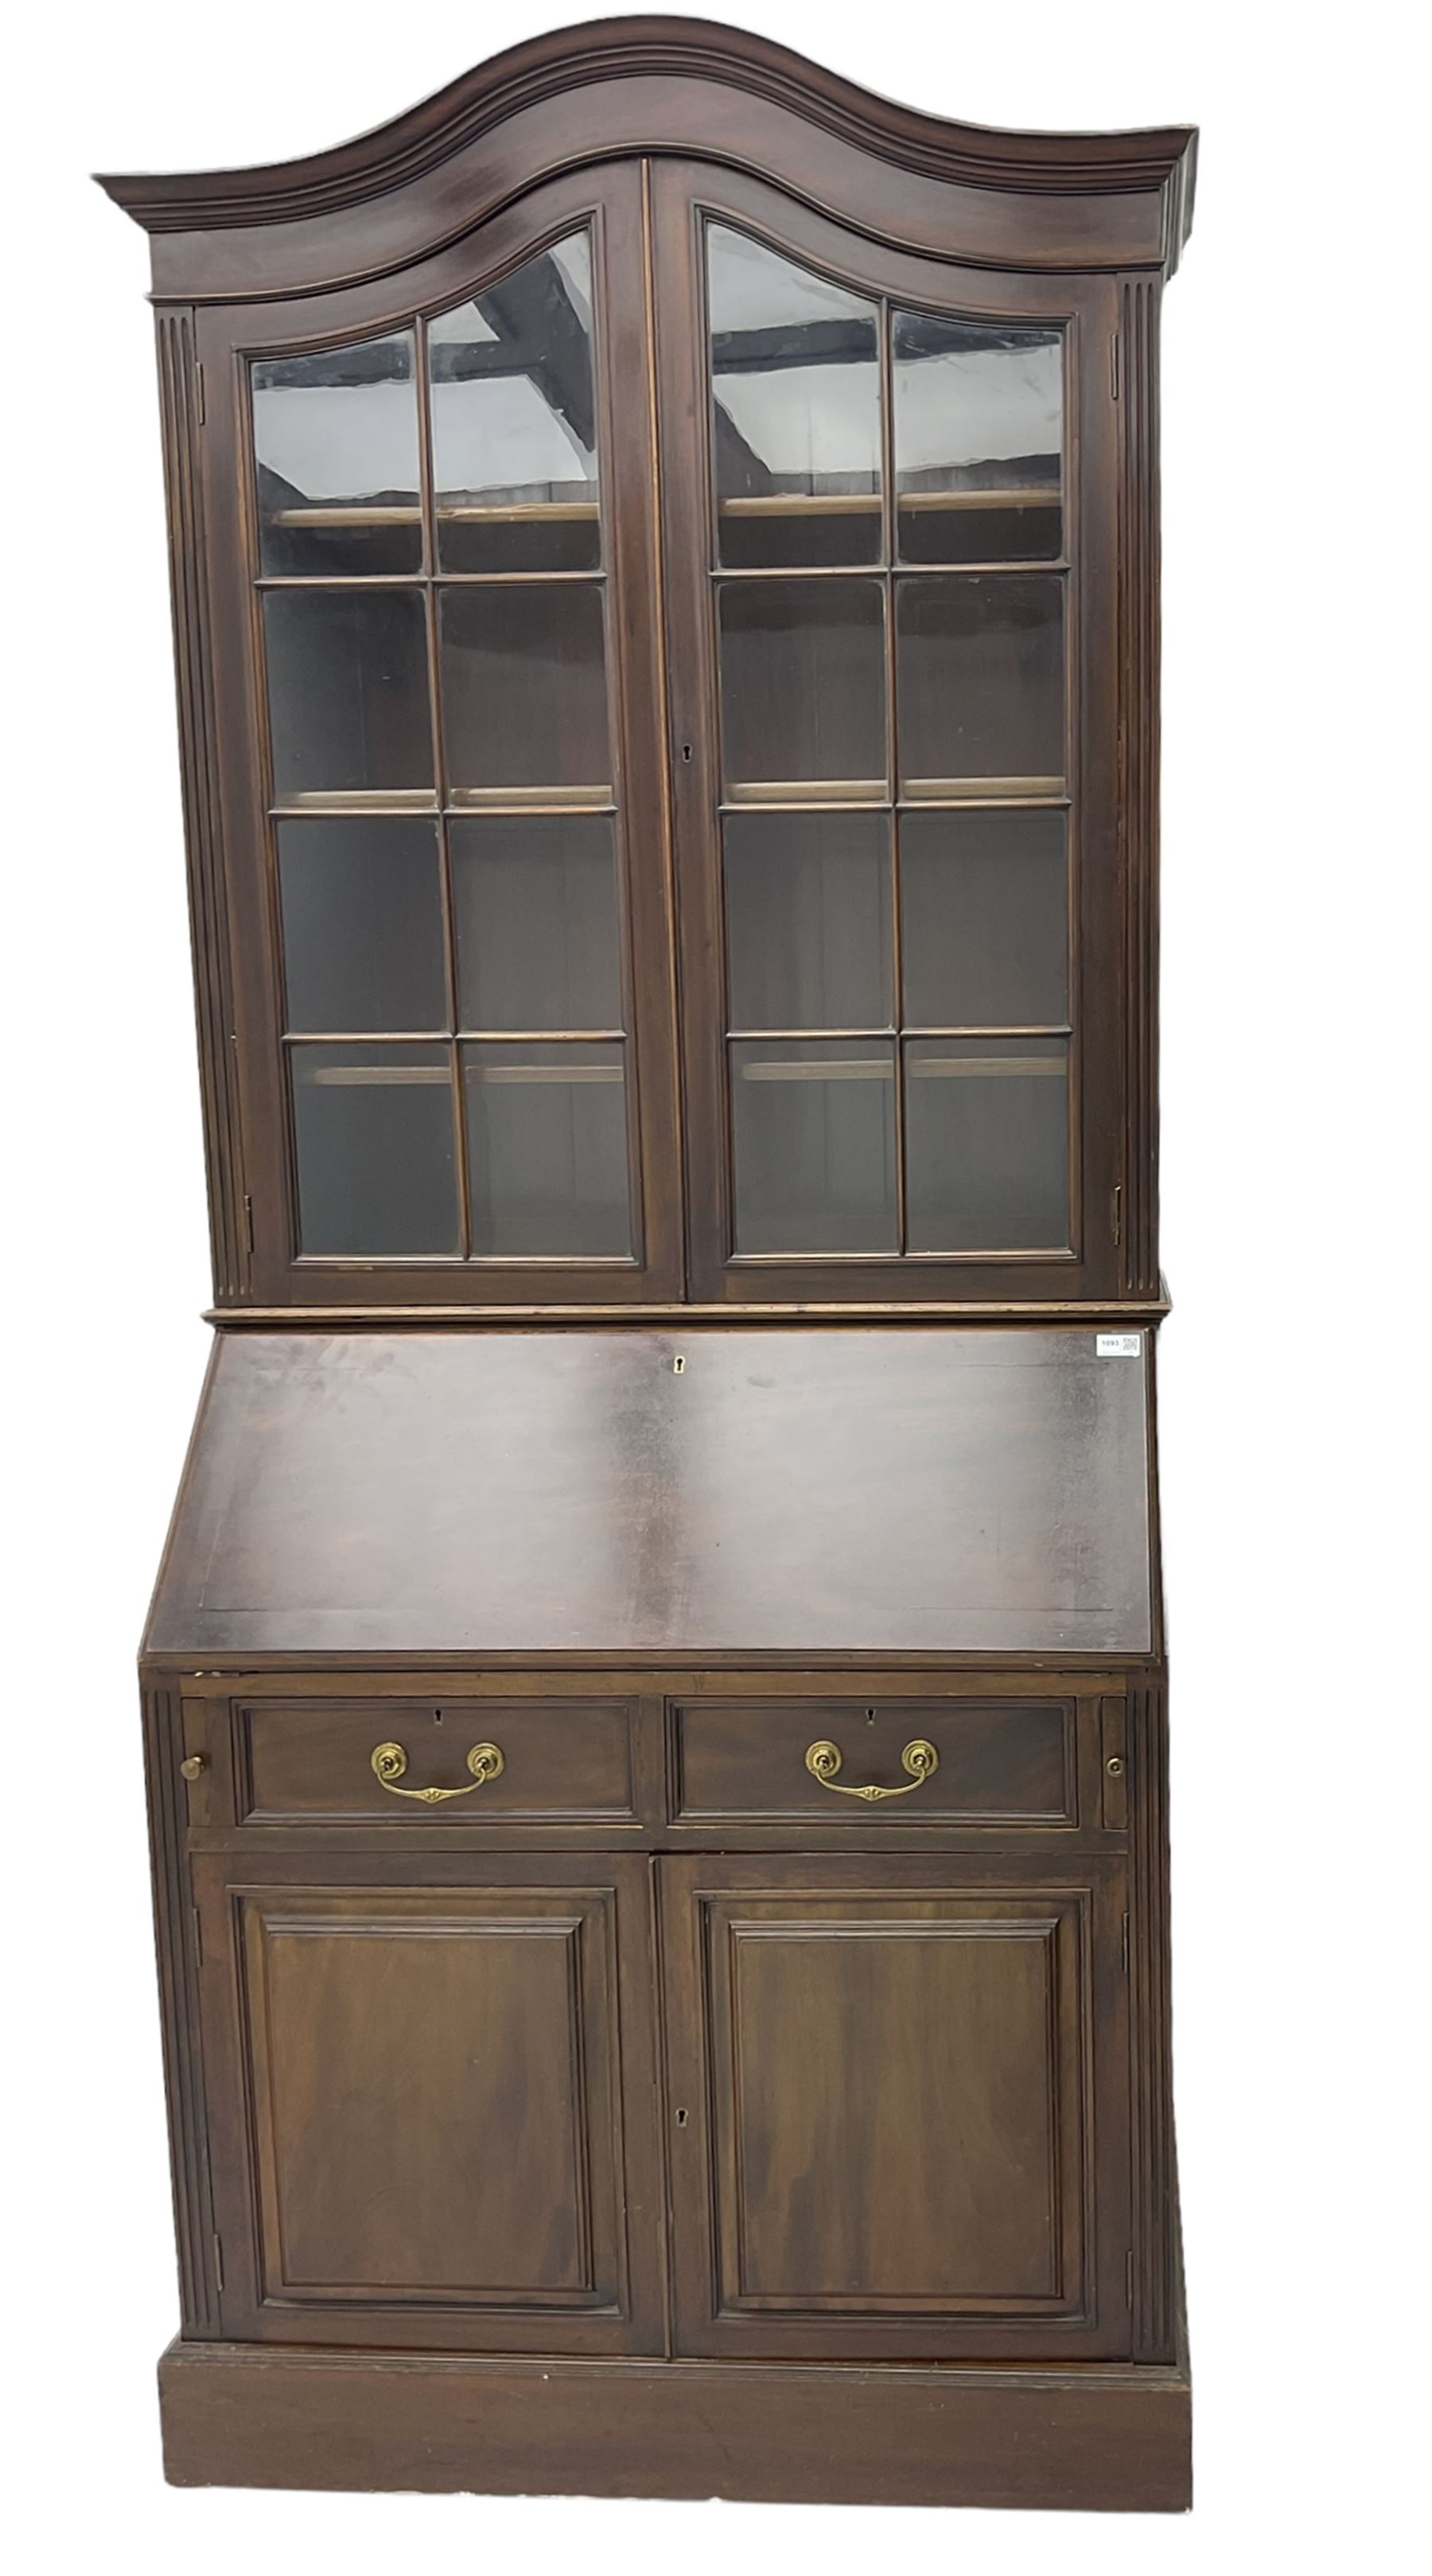 Late 19th century mahogany bureau bookcase - Image 3 of 5